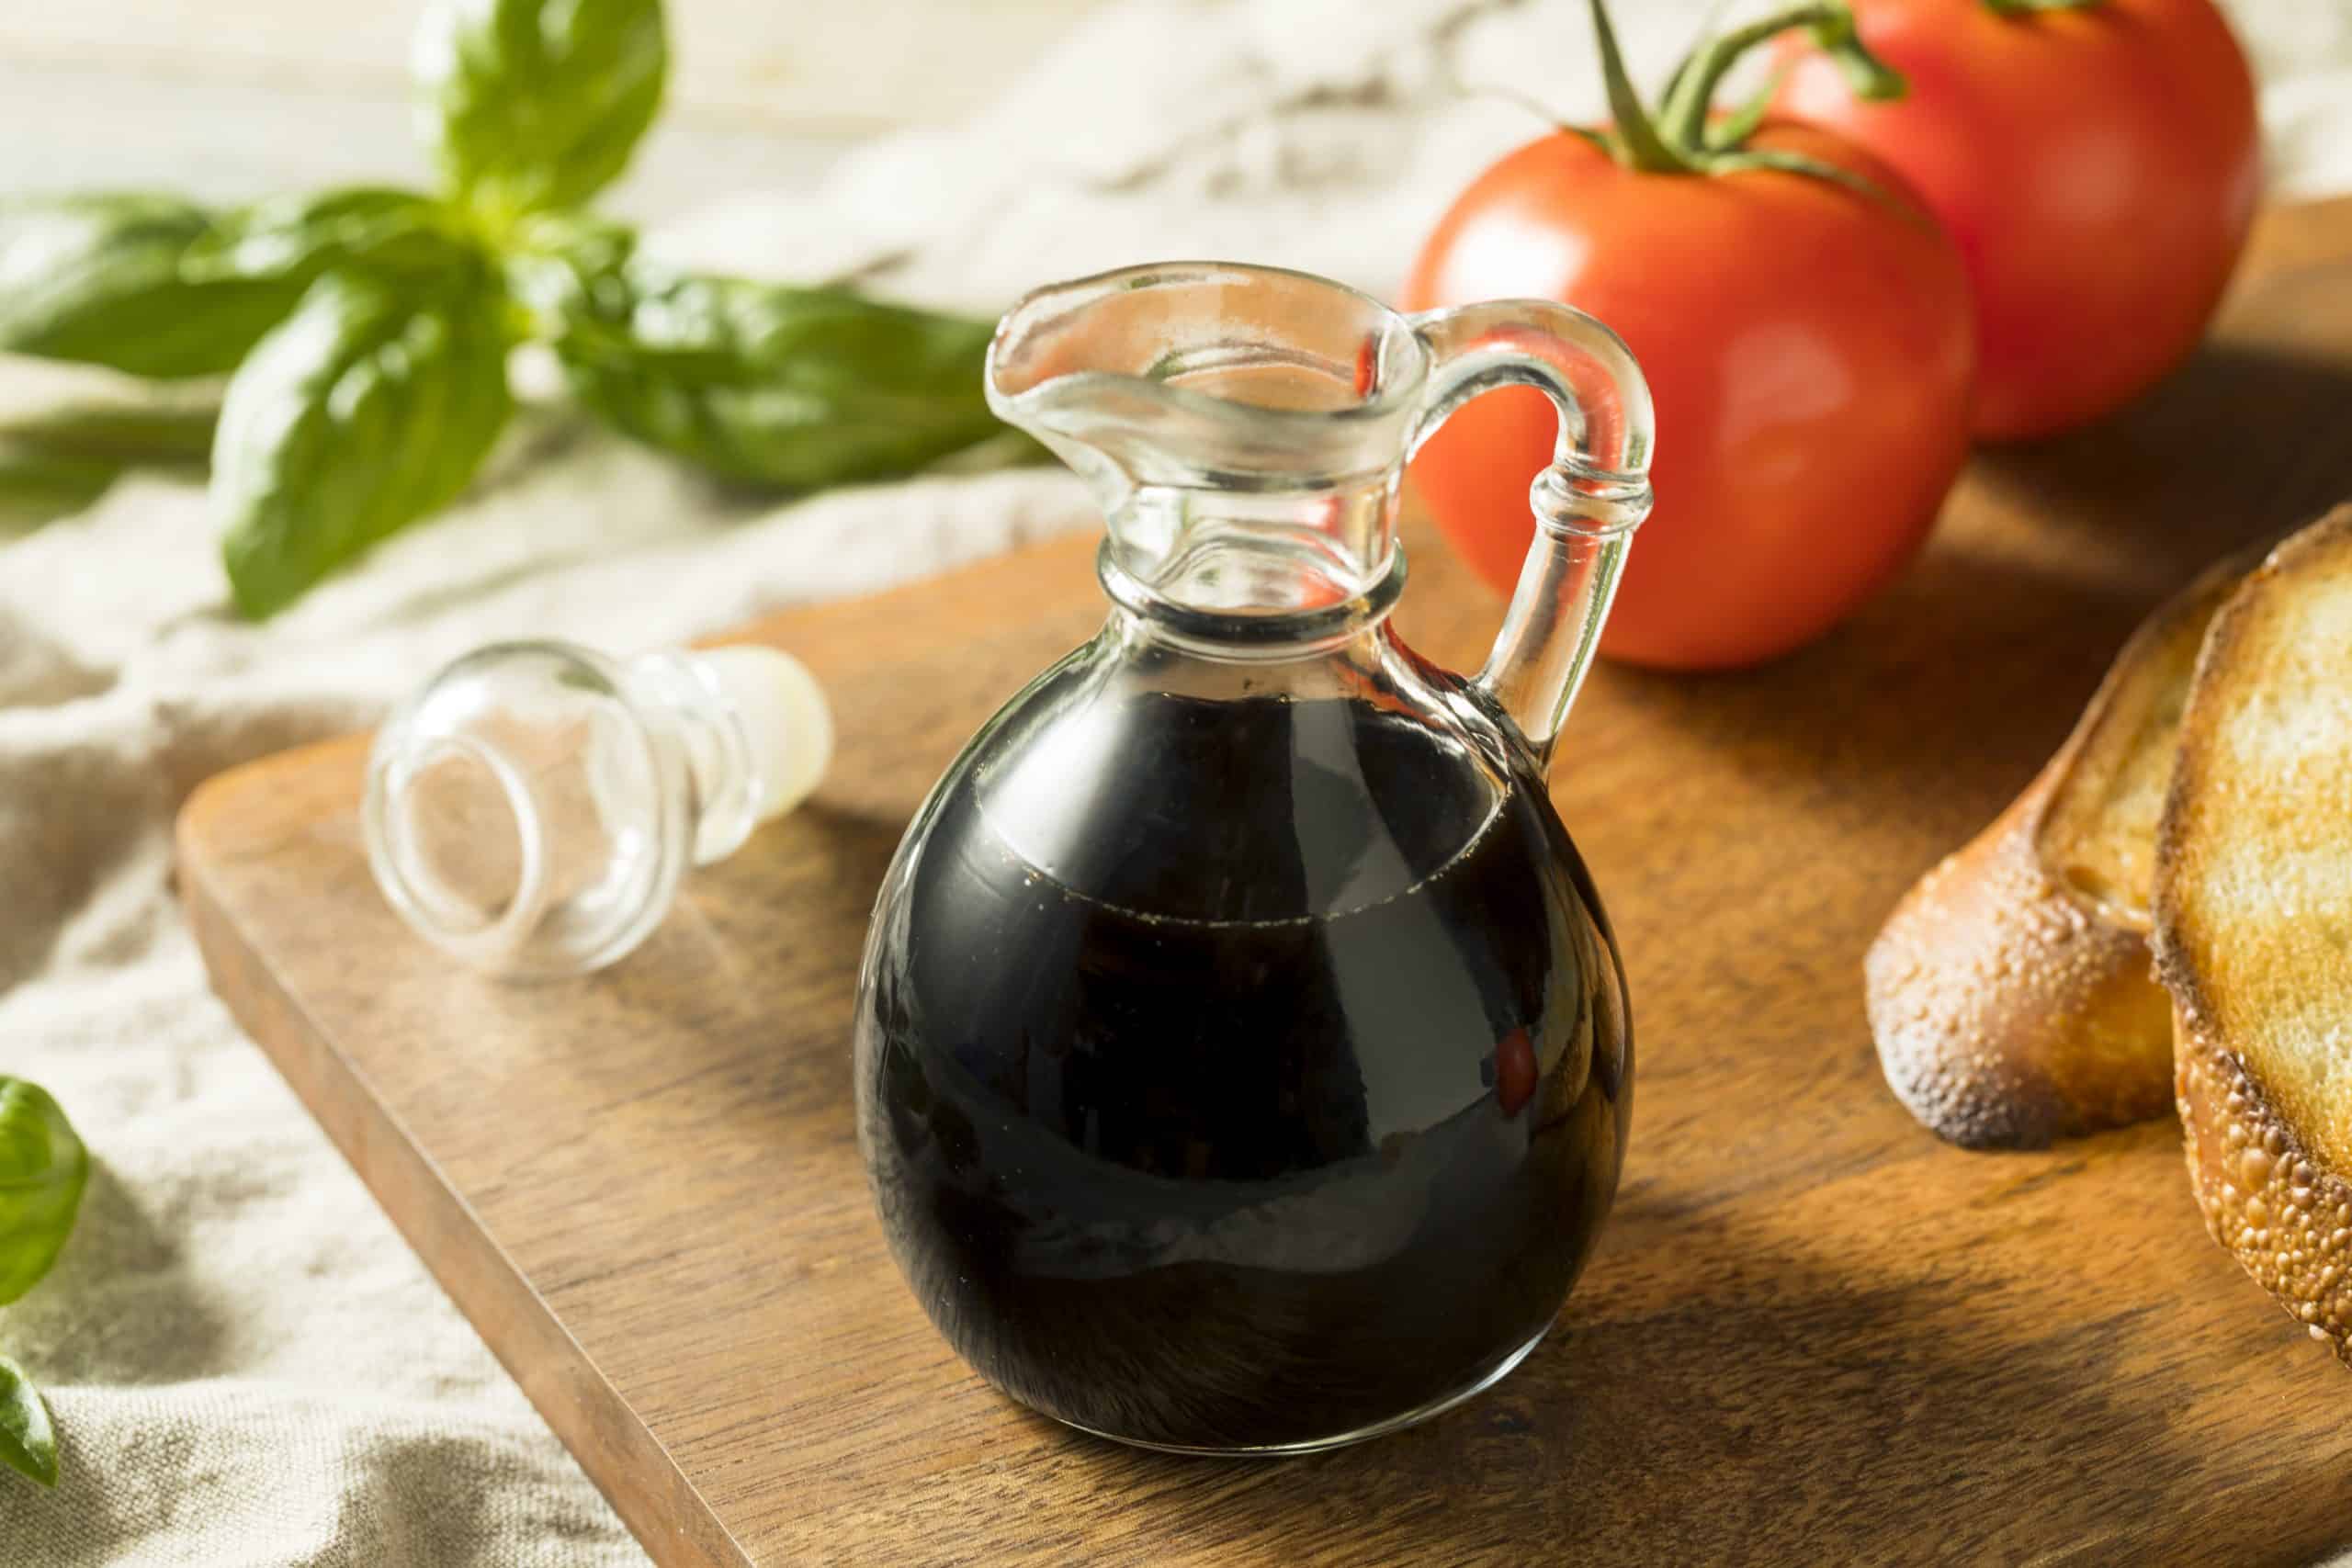 Balsamic vinegar – properties and uses